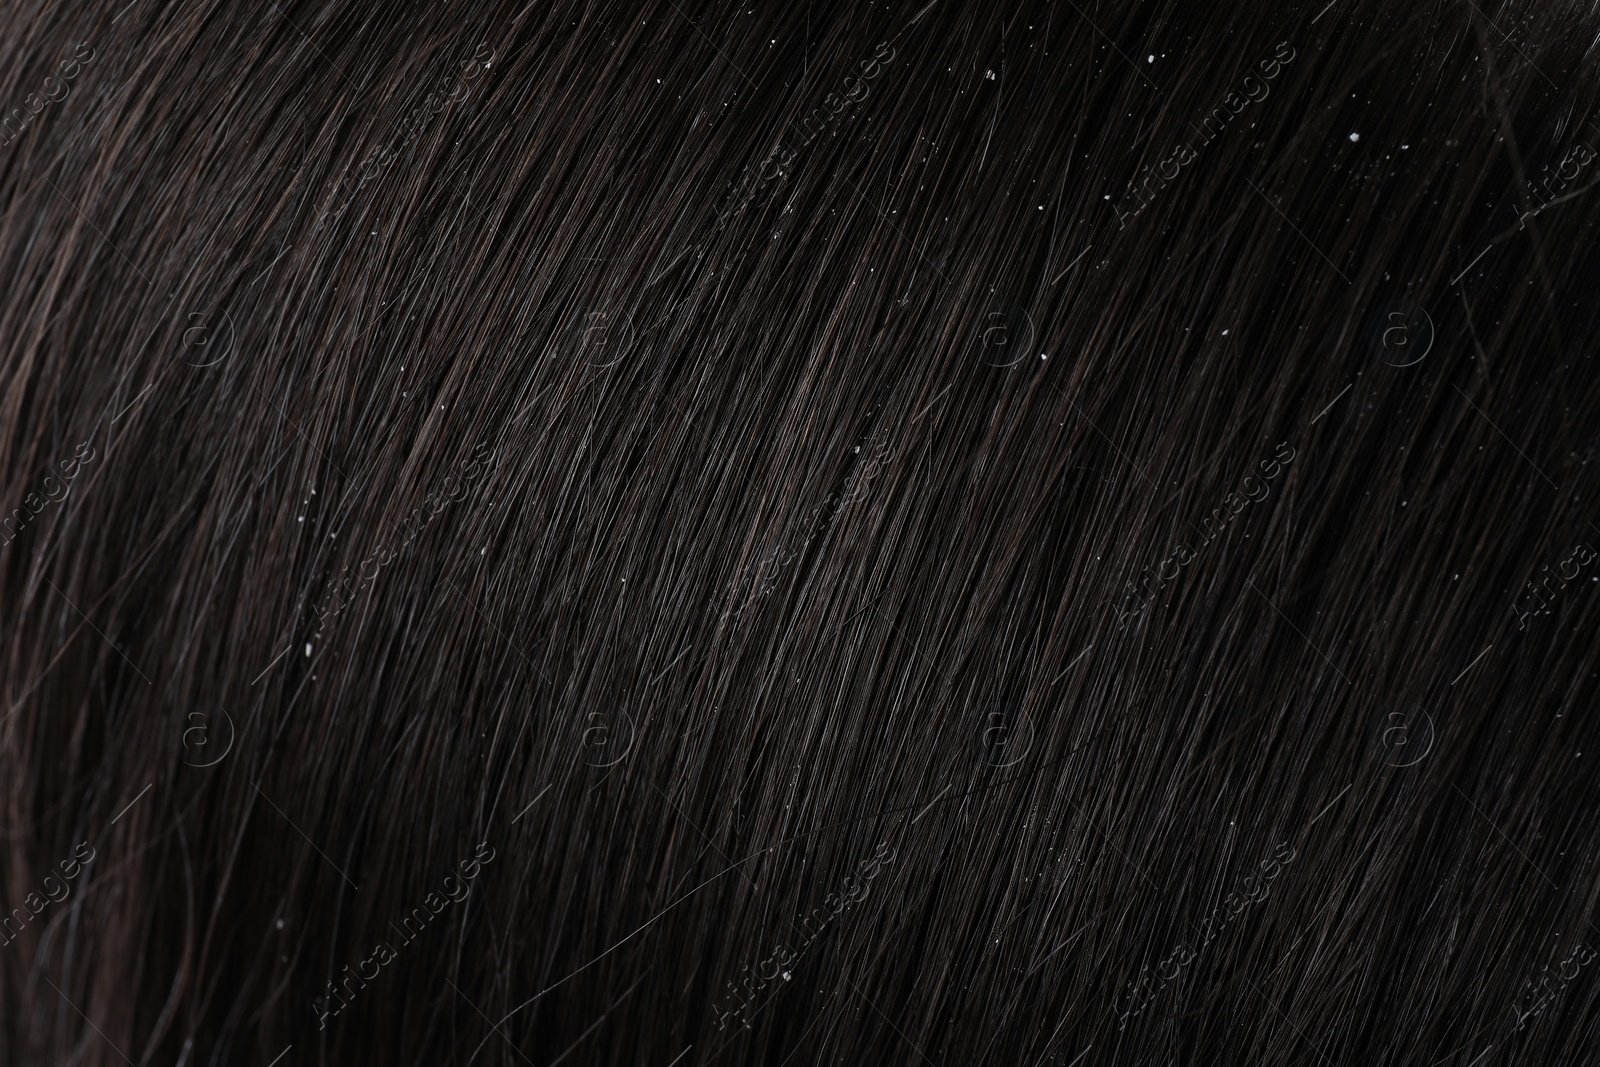 Photo of Closeup view of dark woman`s hair with dandruff